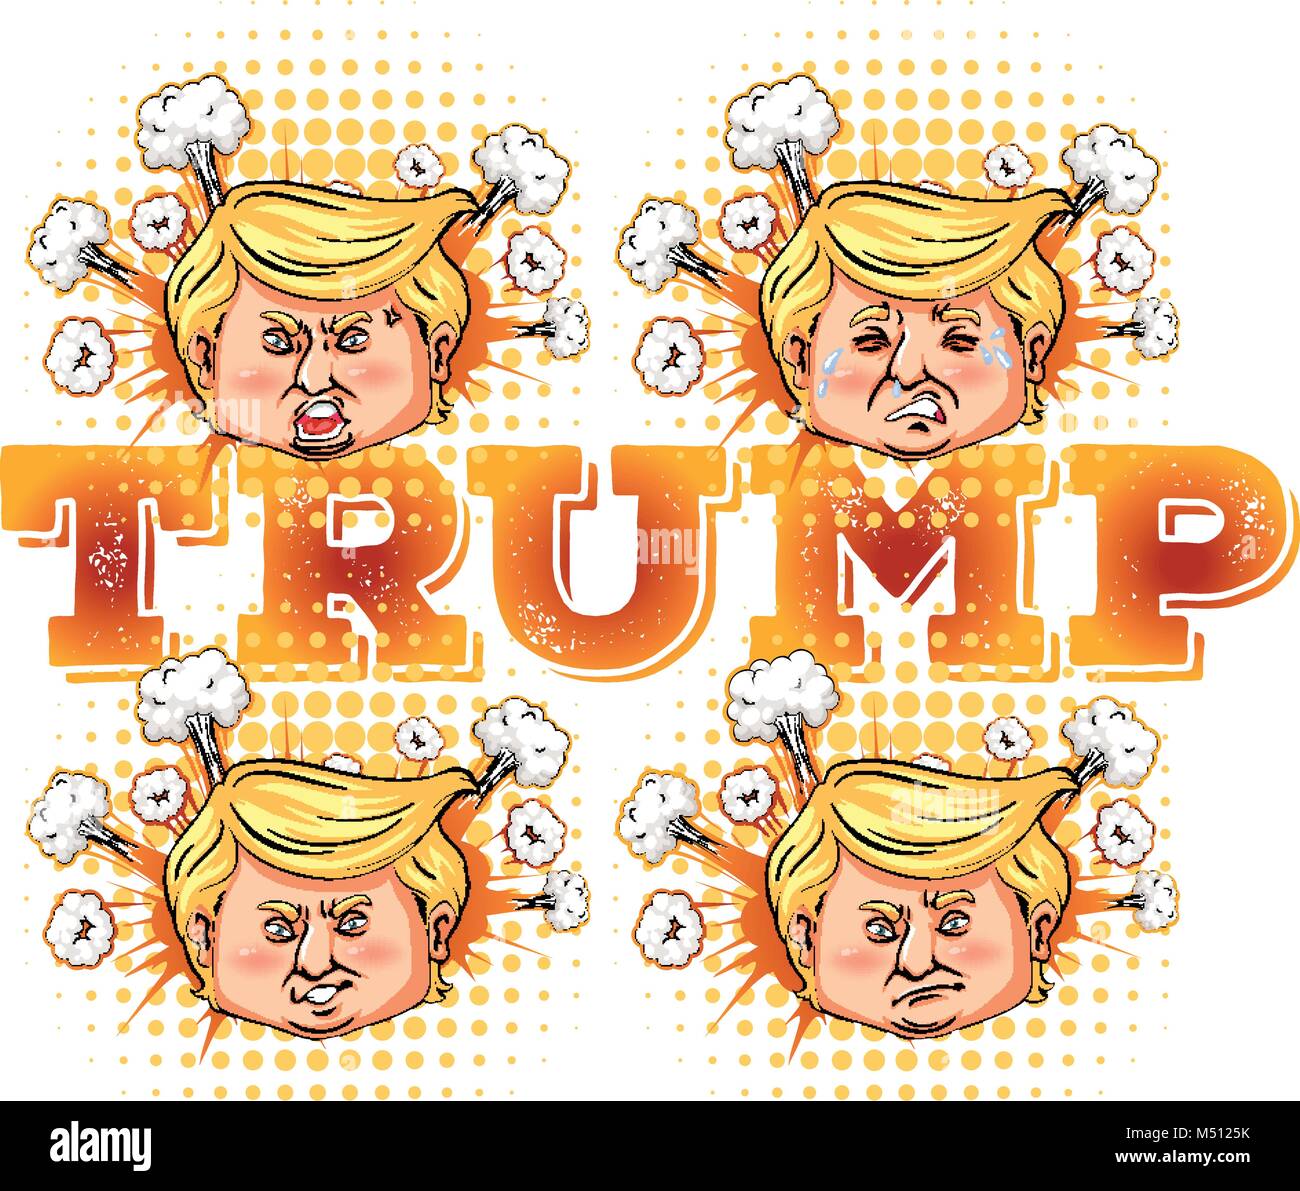 Character sketch of US president Trump illustration Stock Vector